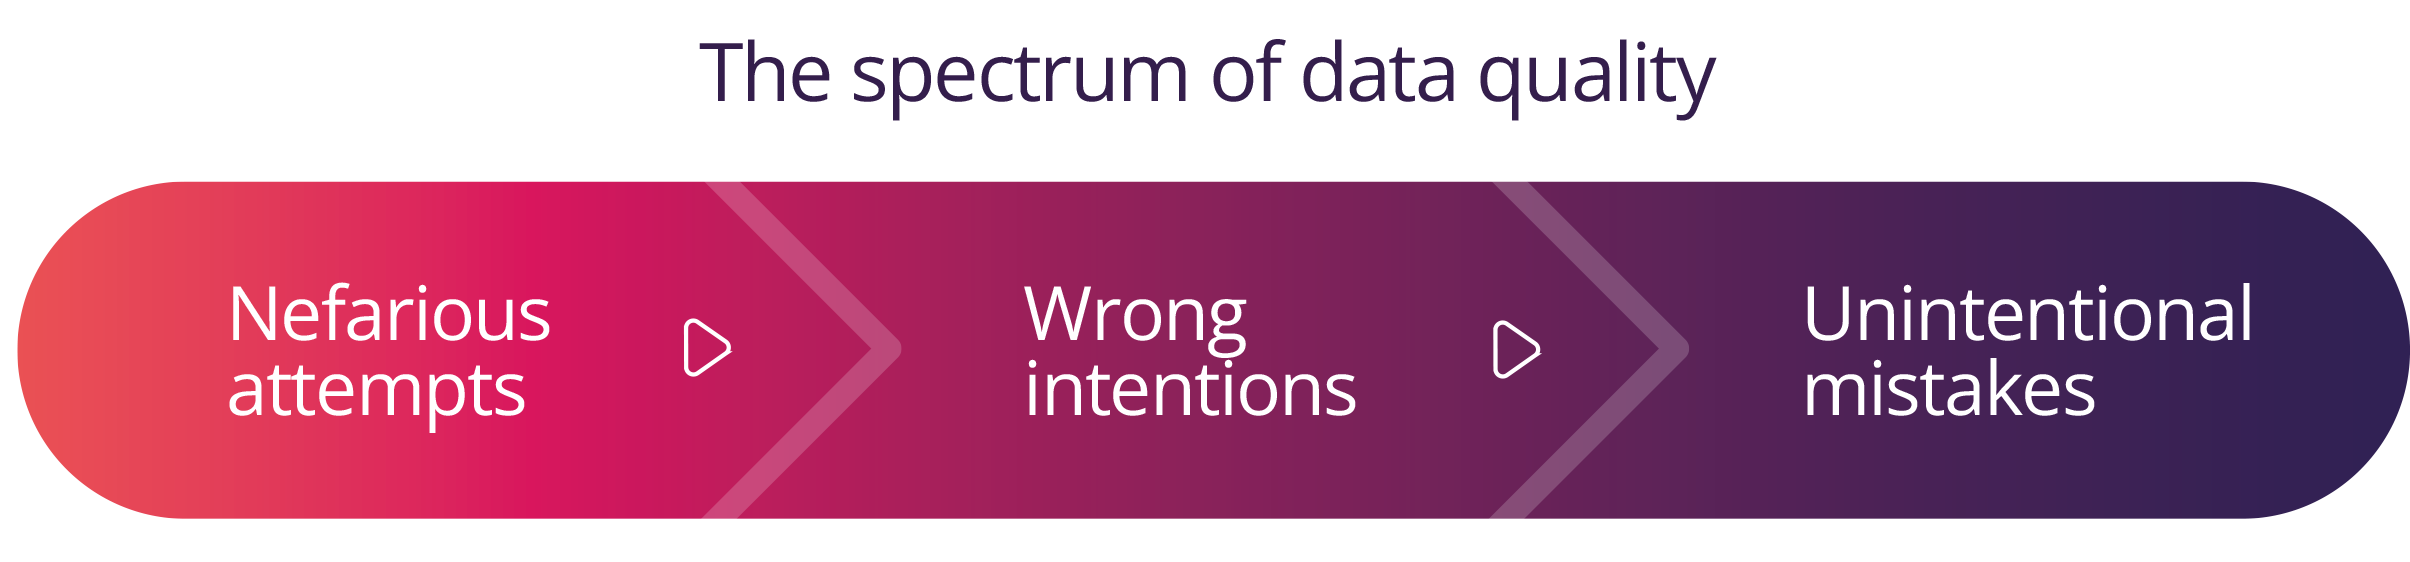 spectrum of data quality